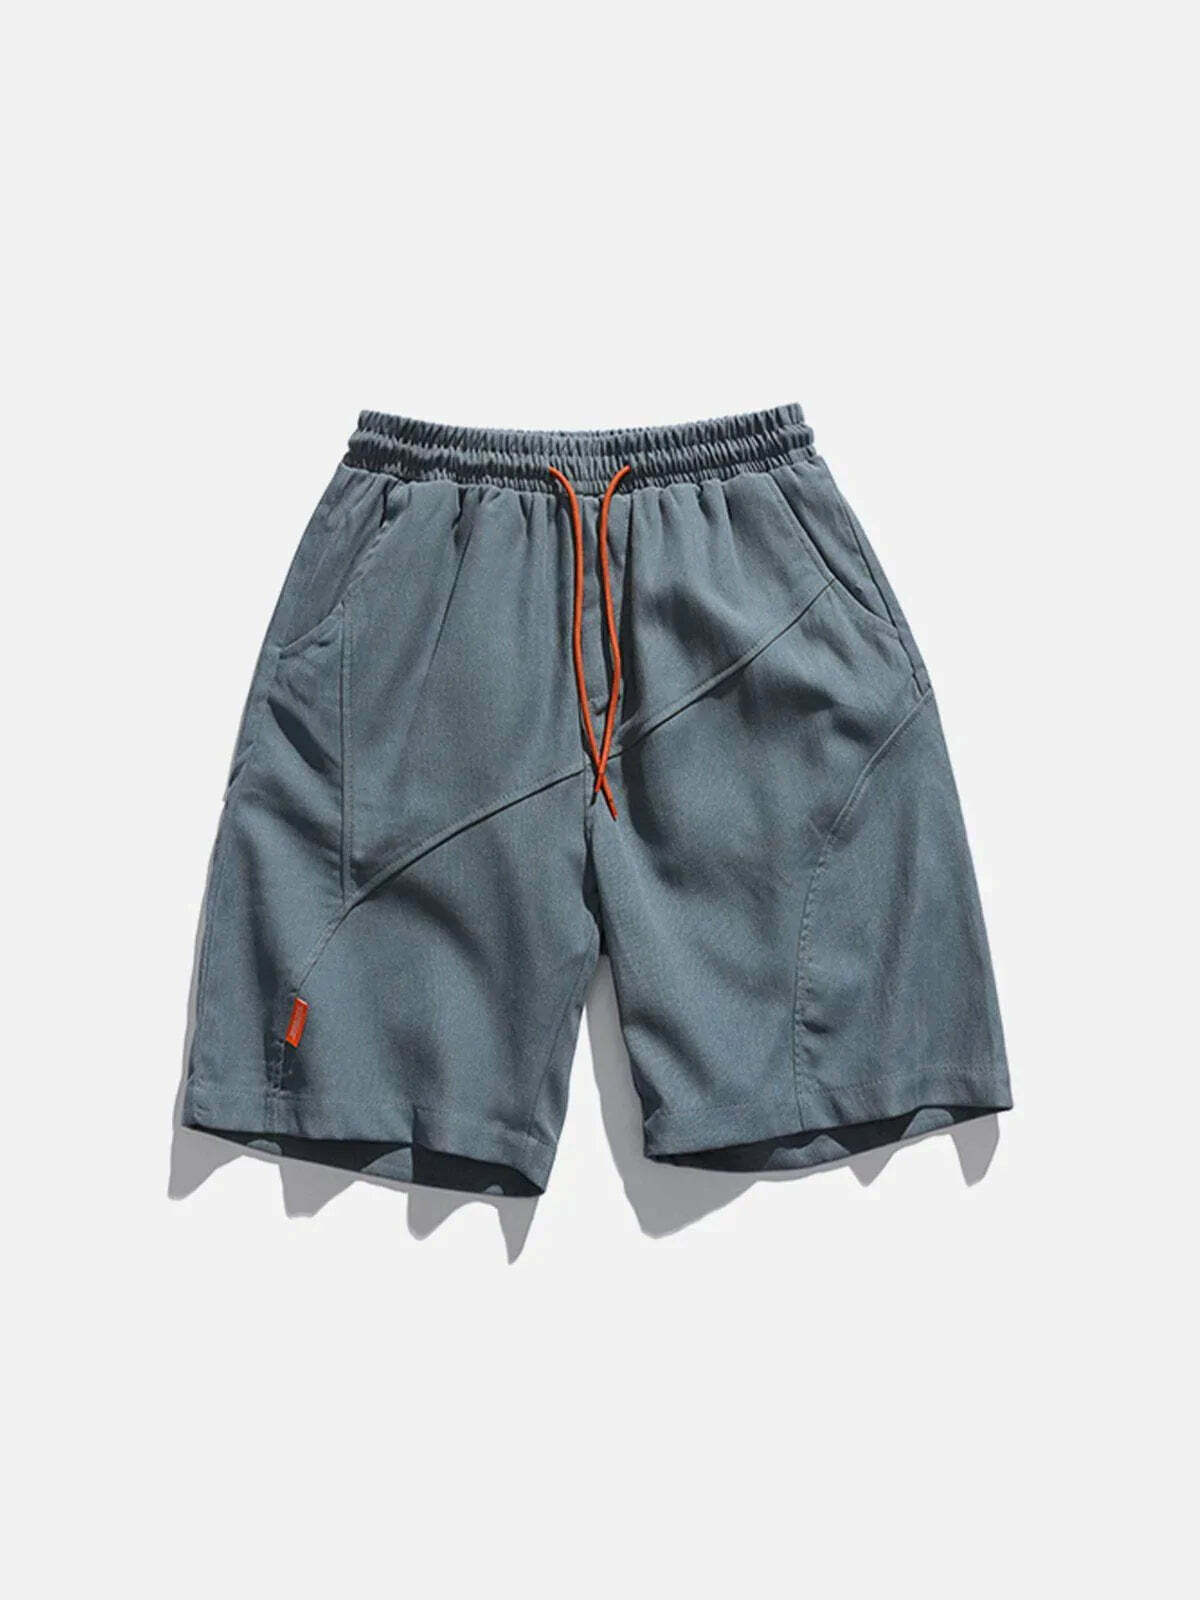 unique spliced drawstring shorts edgy & trendy streetwear 6737